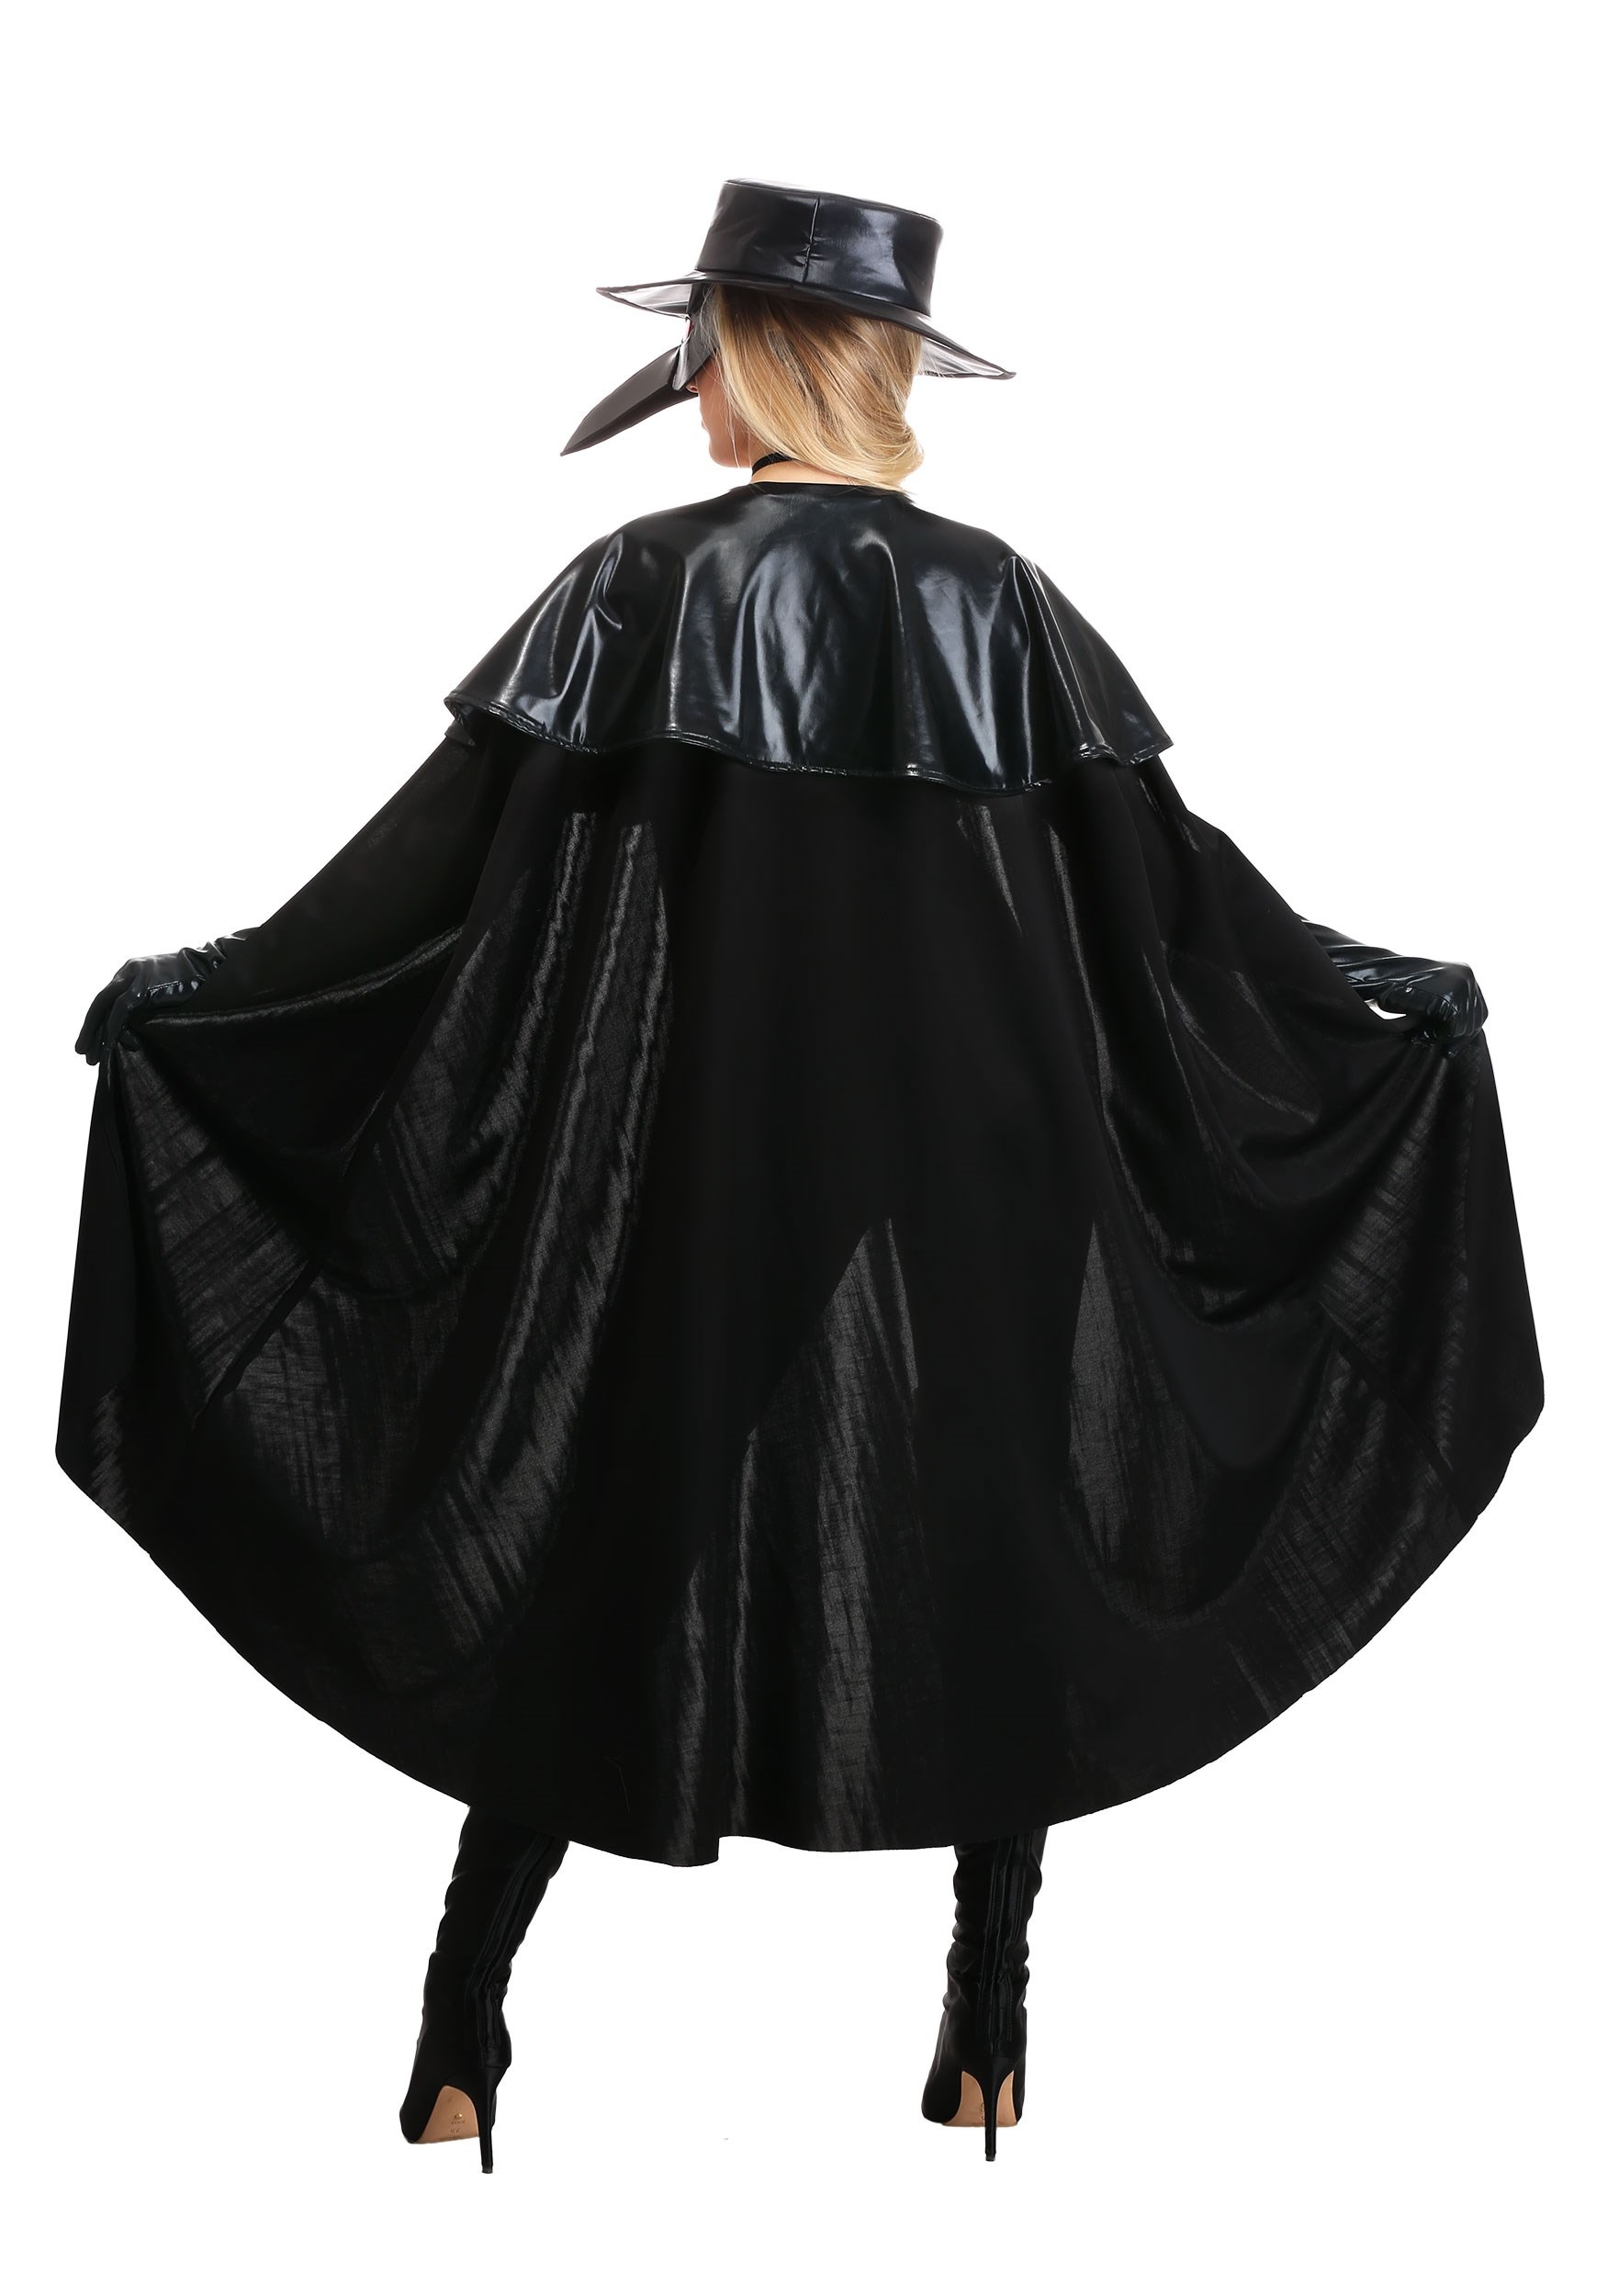 Eerie Women's Plague Doctor Costume , Historical Costume